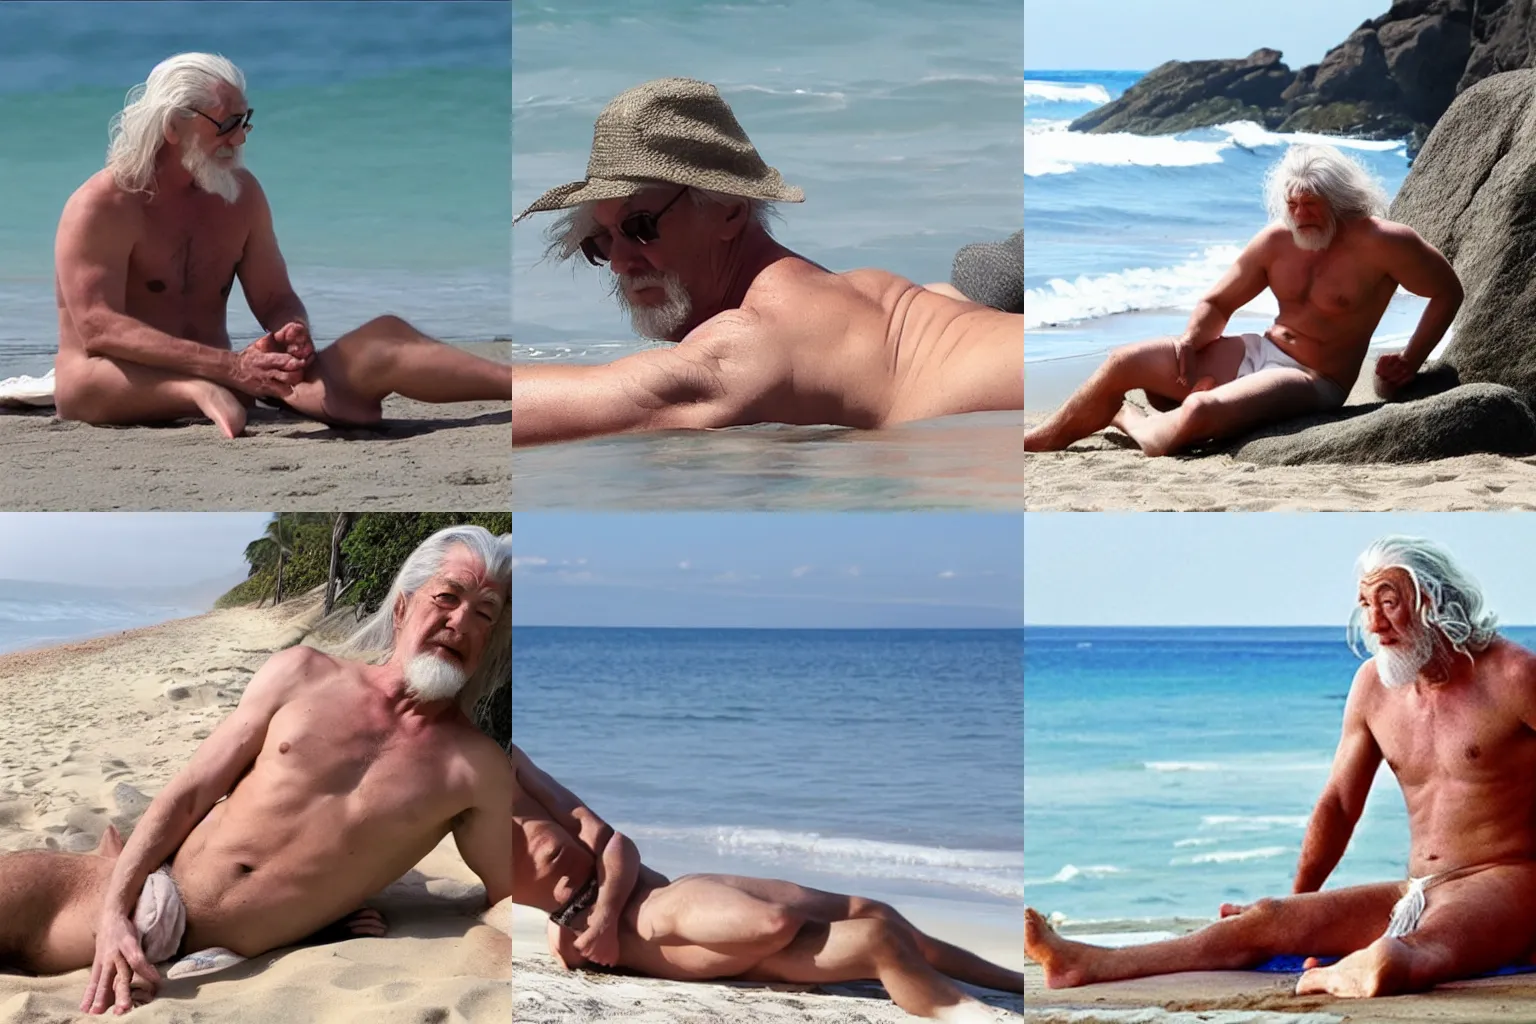 Prompt: gandalf shirtless sunbathing at the beach